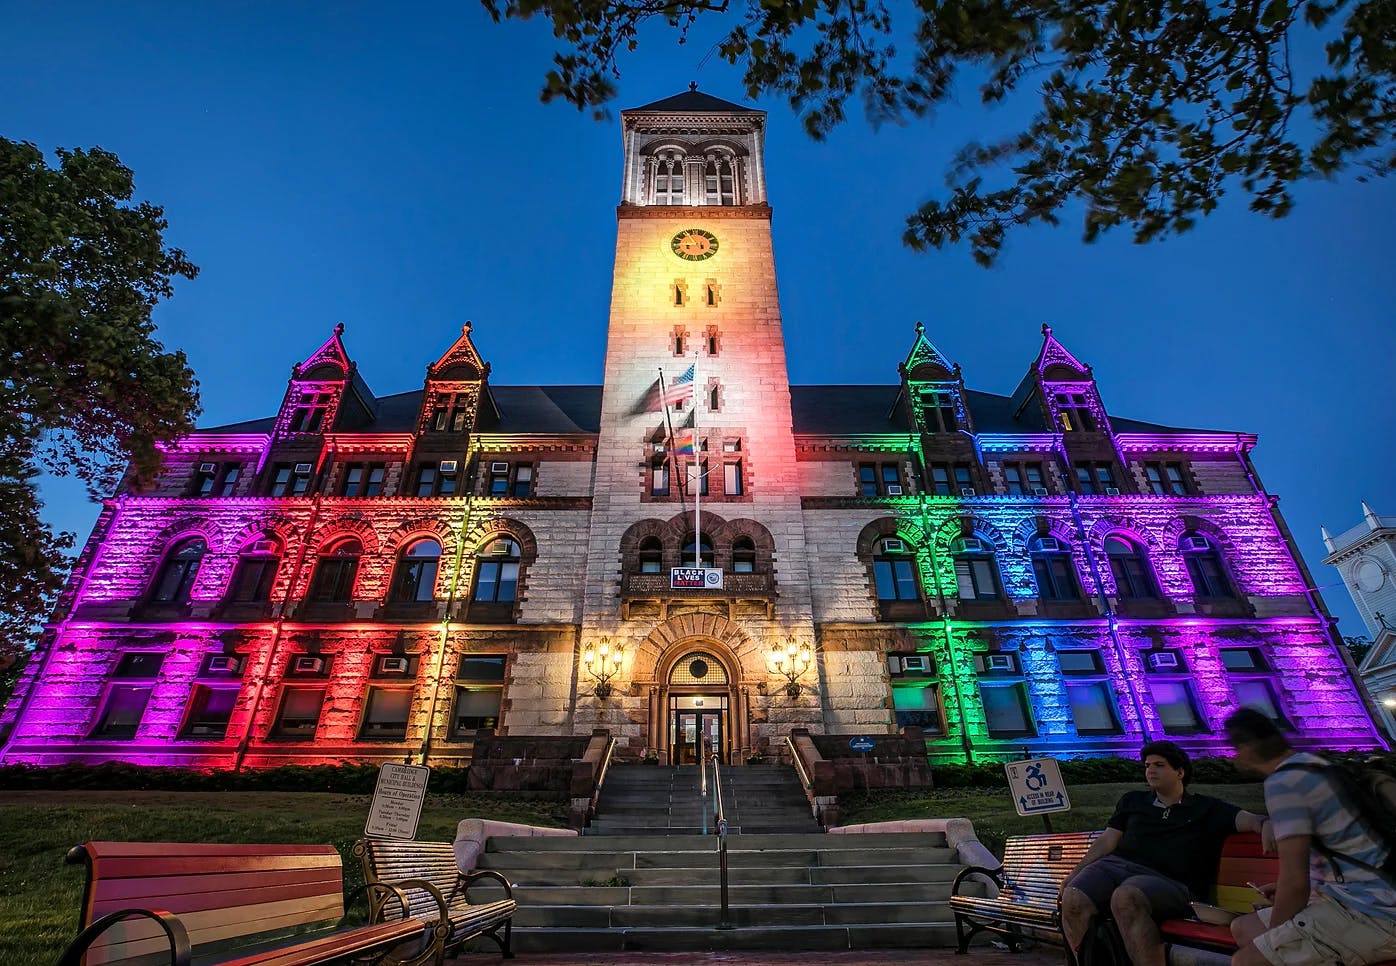 Cambridge city hall at night illuminated with rainbow color lights